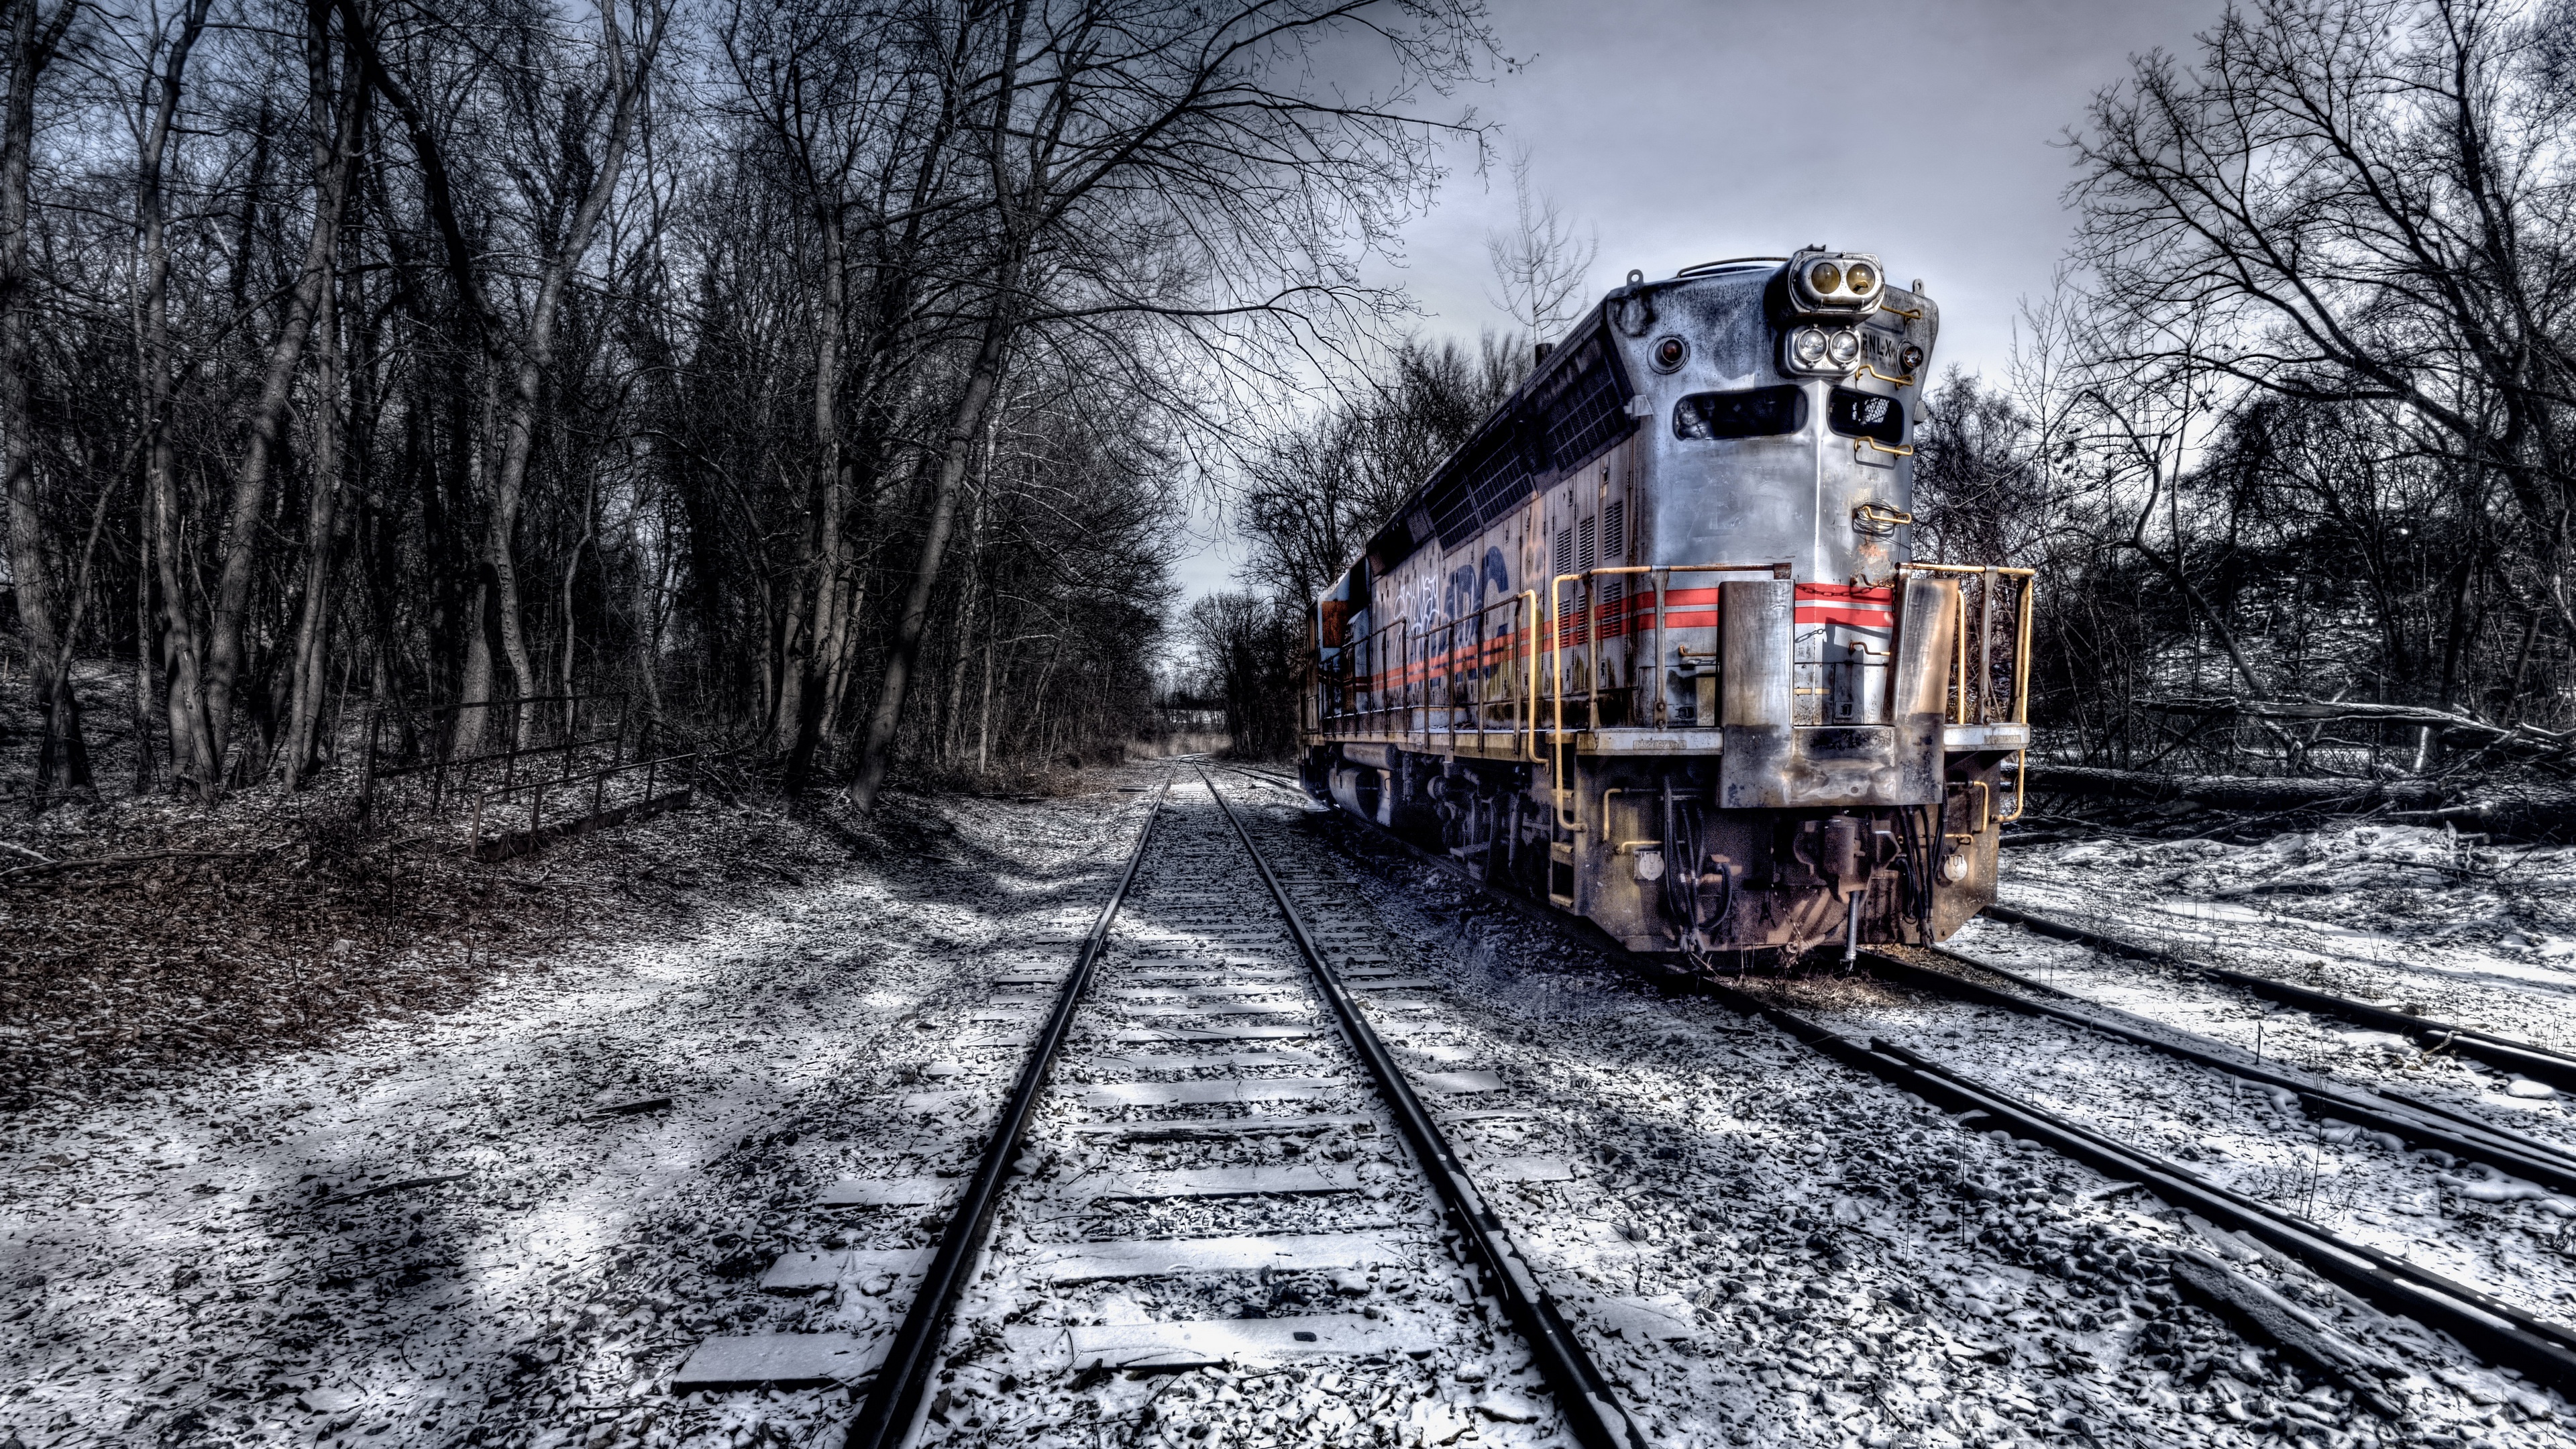 Railway Train Vehicle Locomotive Diesel Locomotive Cold Winter Outdoors Snow 3840x2160